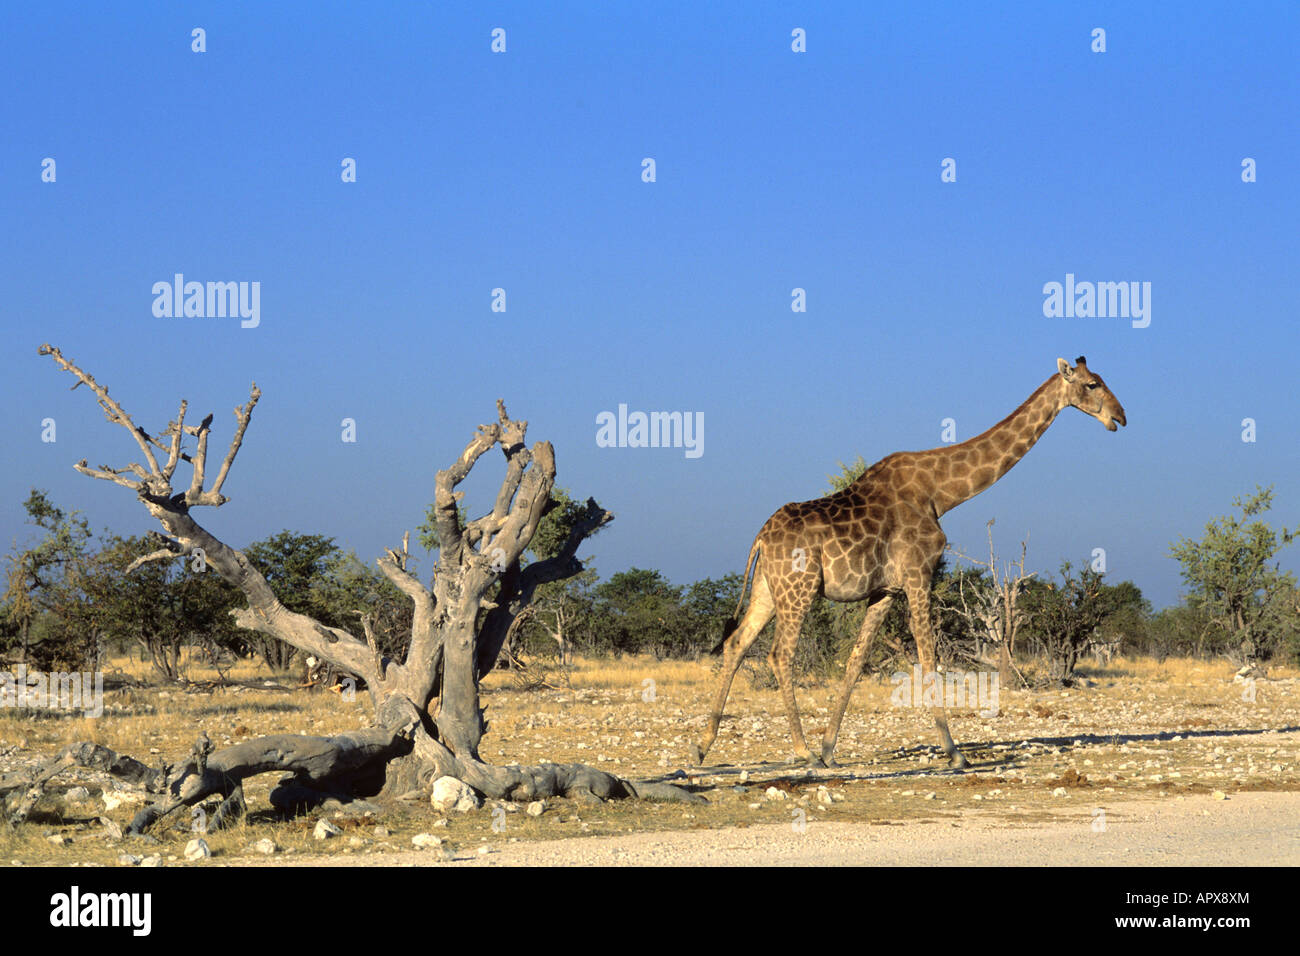 A giraffe walking past dead tree stump Stock Photo